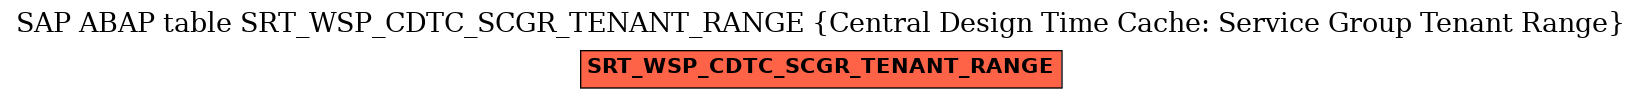 E-R Diagram for table SRT_WSP_CDTC_SCGR_TENANT_RANGE (Central Design Time Cache: Service Group Tenant Range)